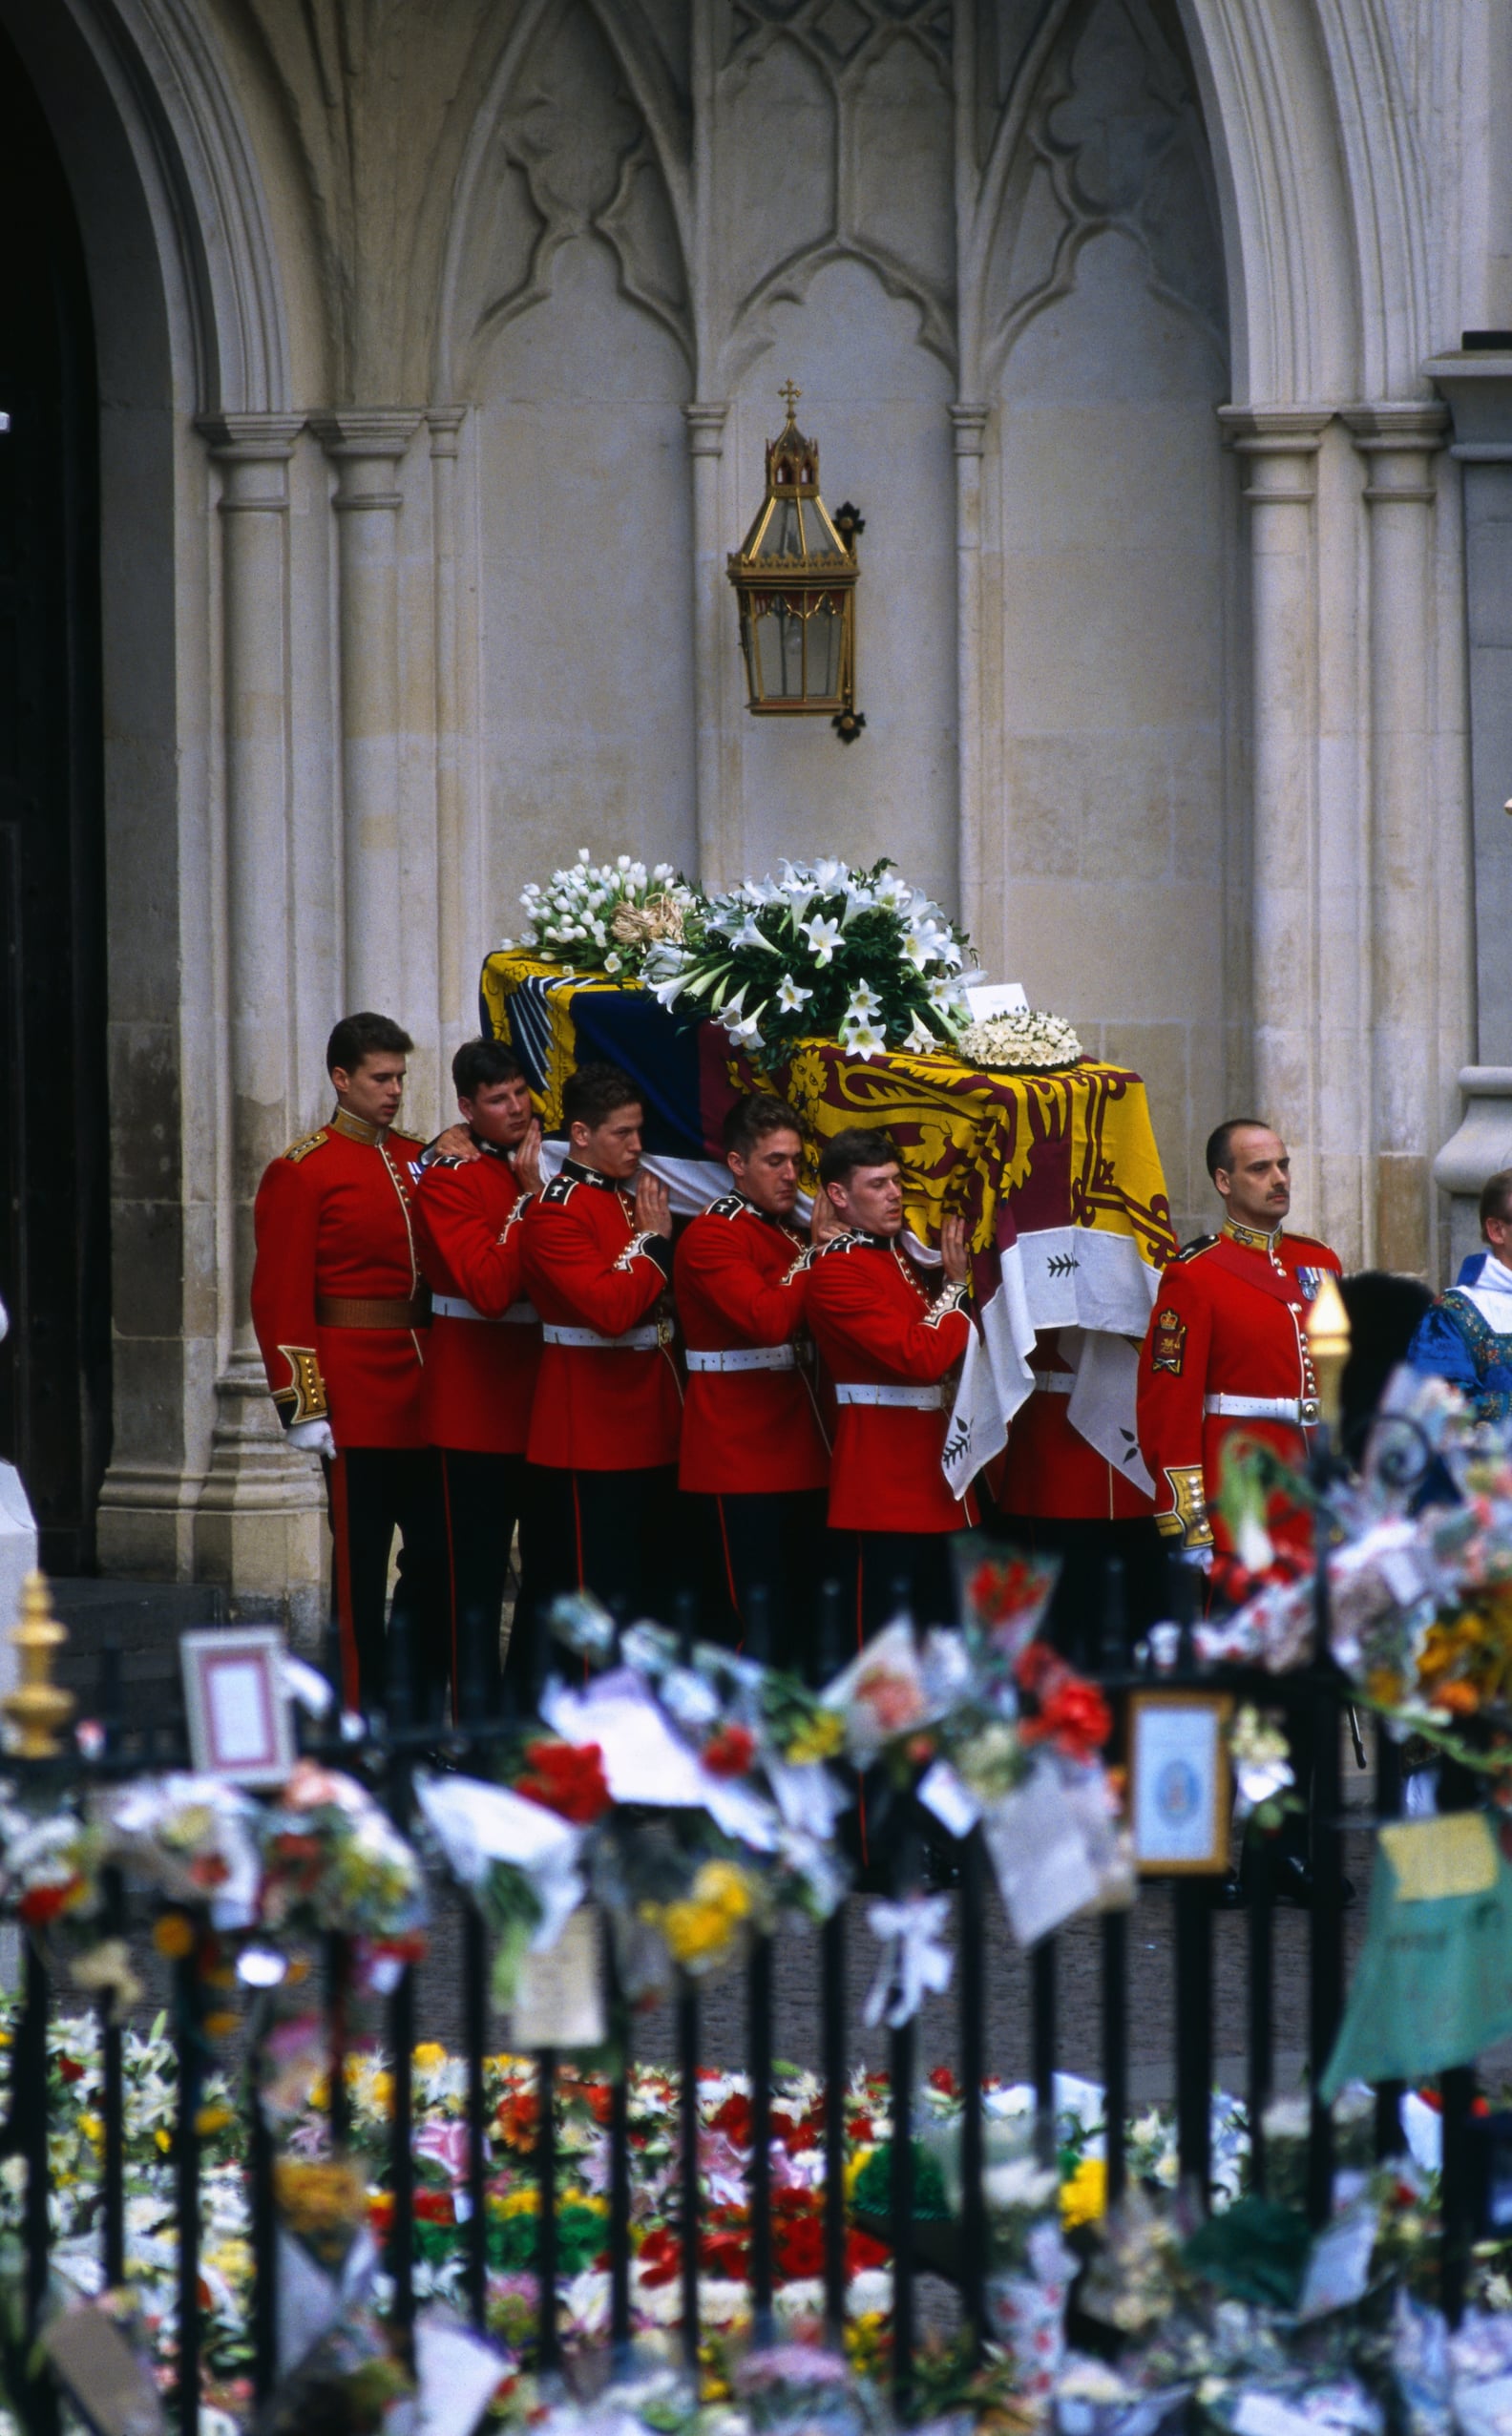 Princess Diana Public Funeral Pictures | POPSUGAR Celebrity